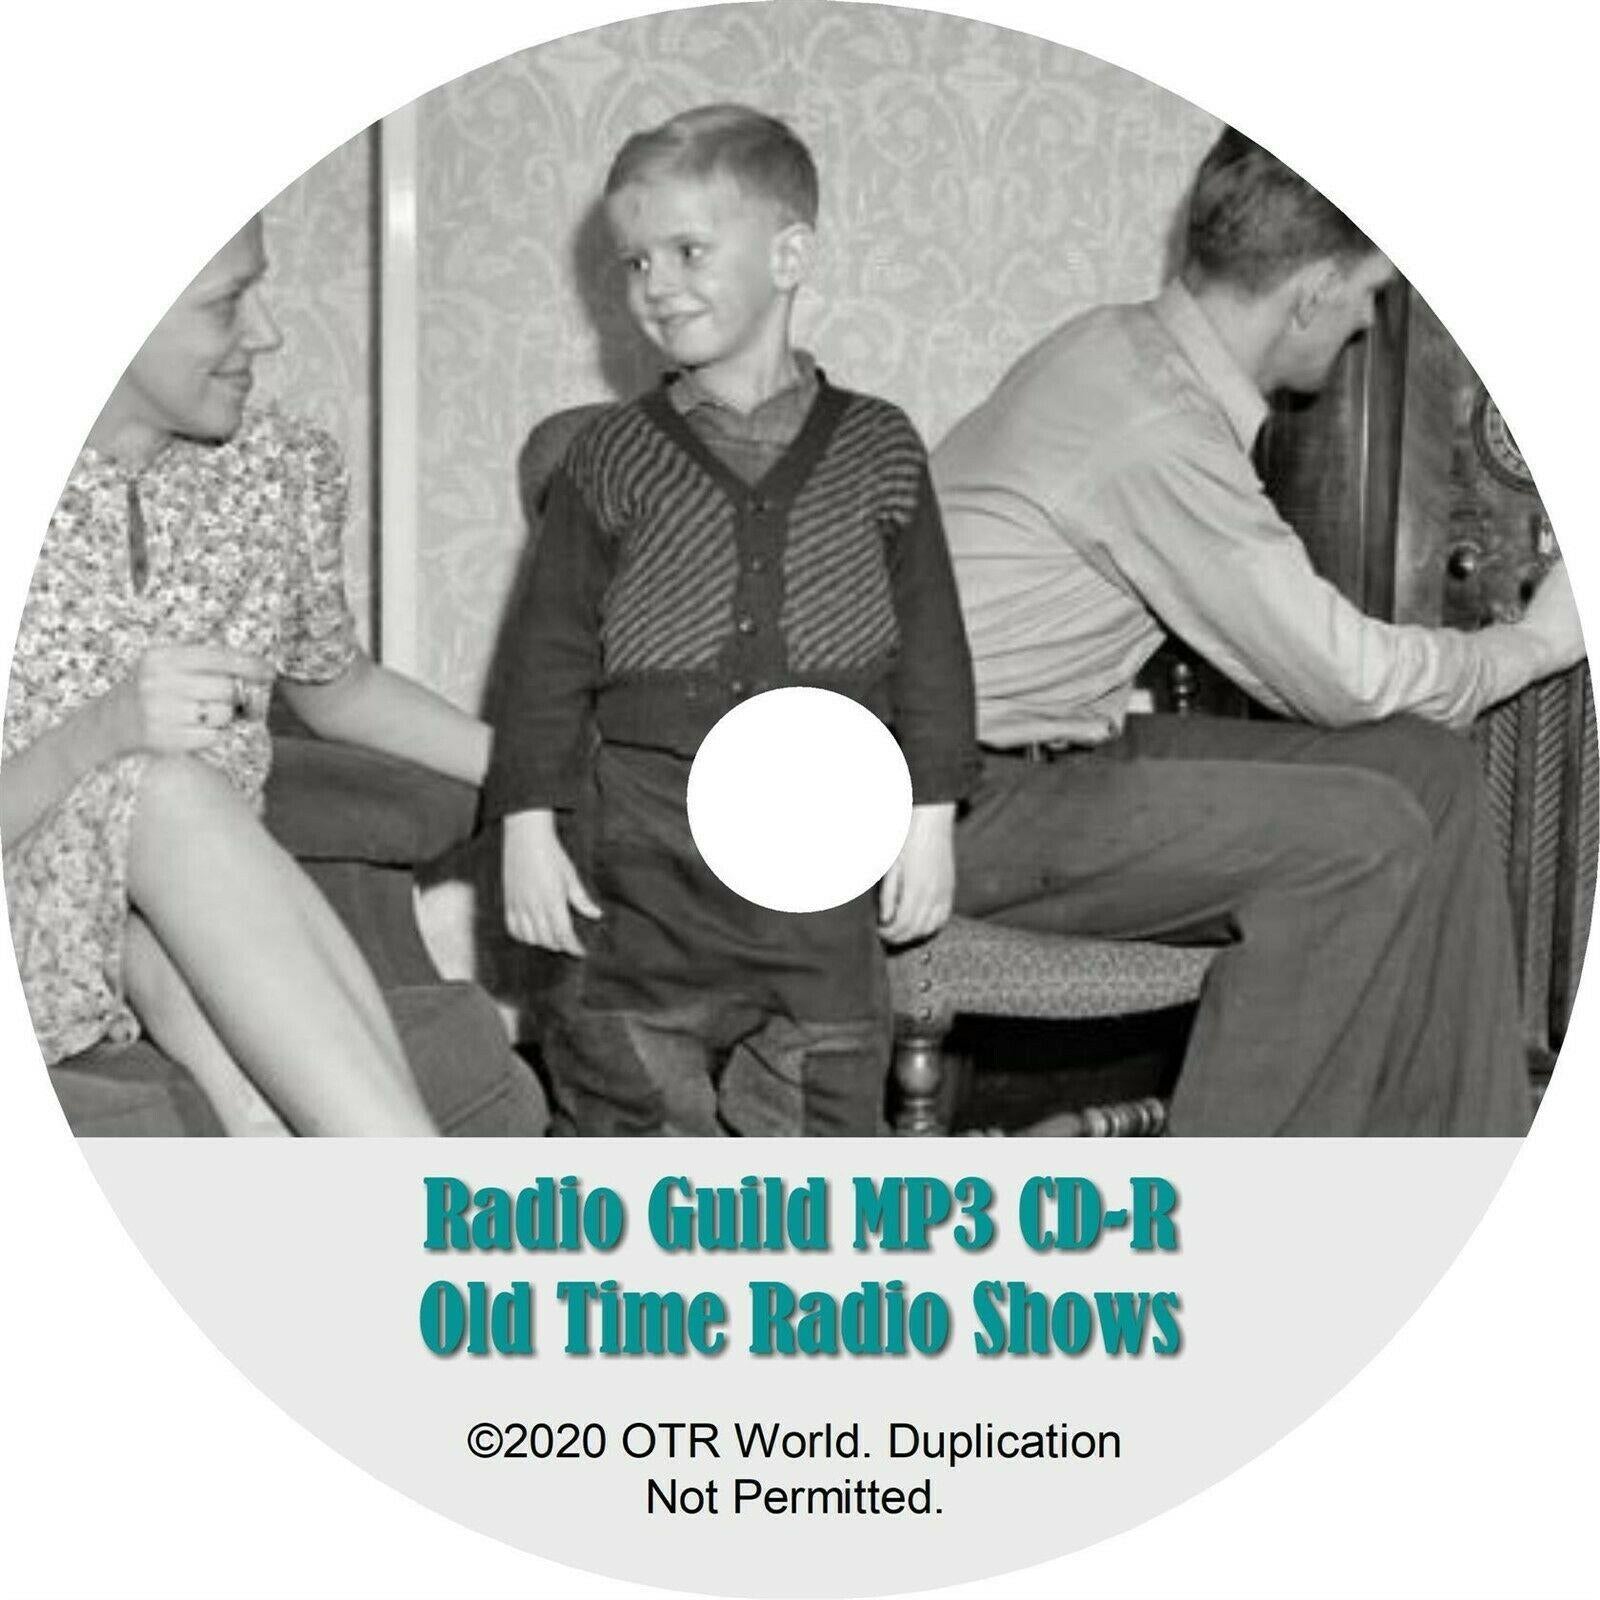 Radio Guild Old Time Radio Shows MP3 CD-R OTR OTRS 3 Episodes